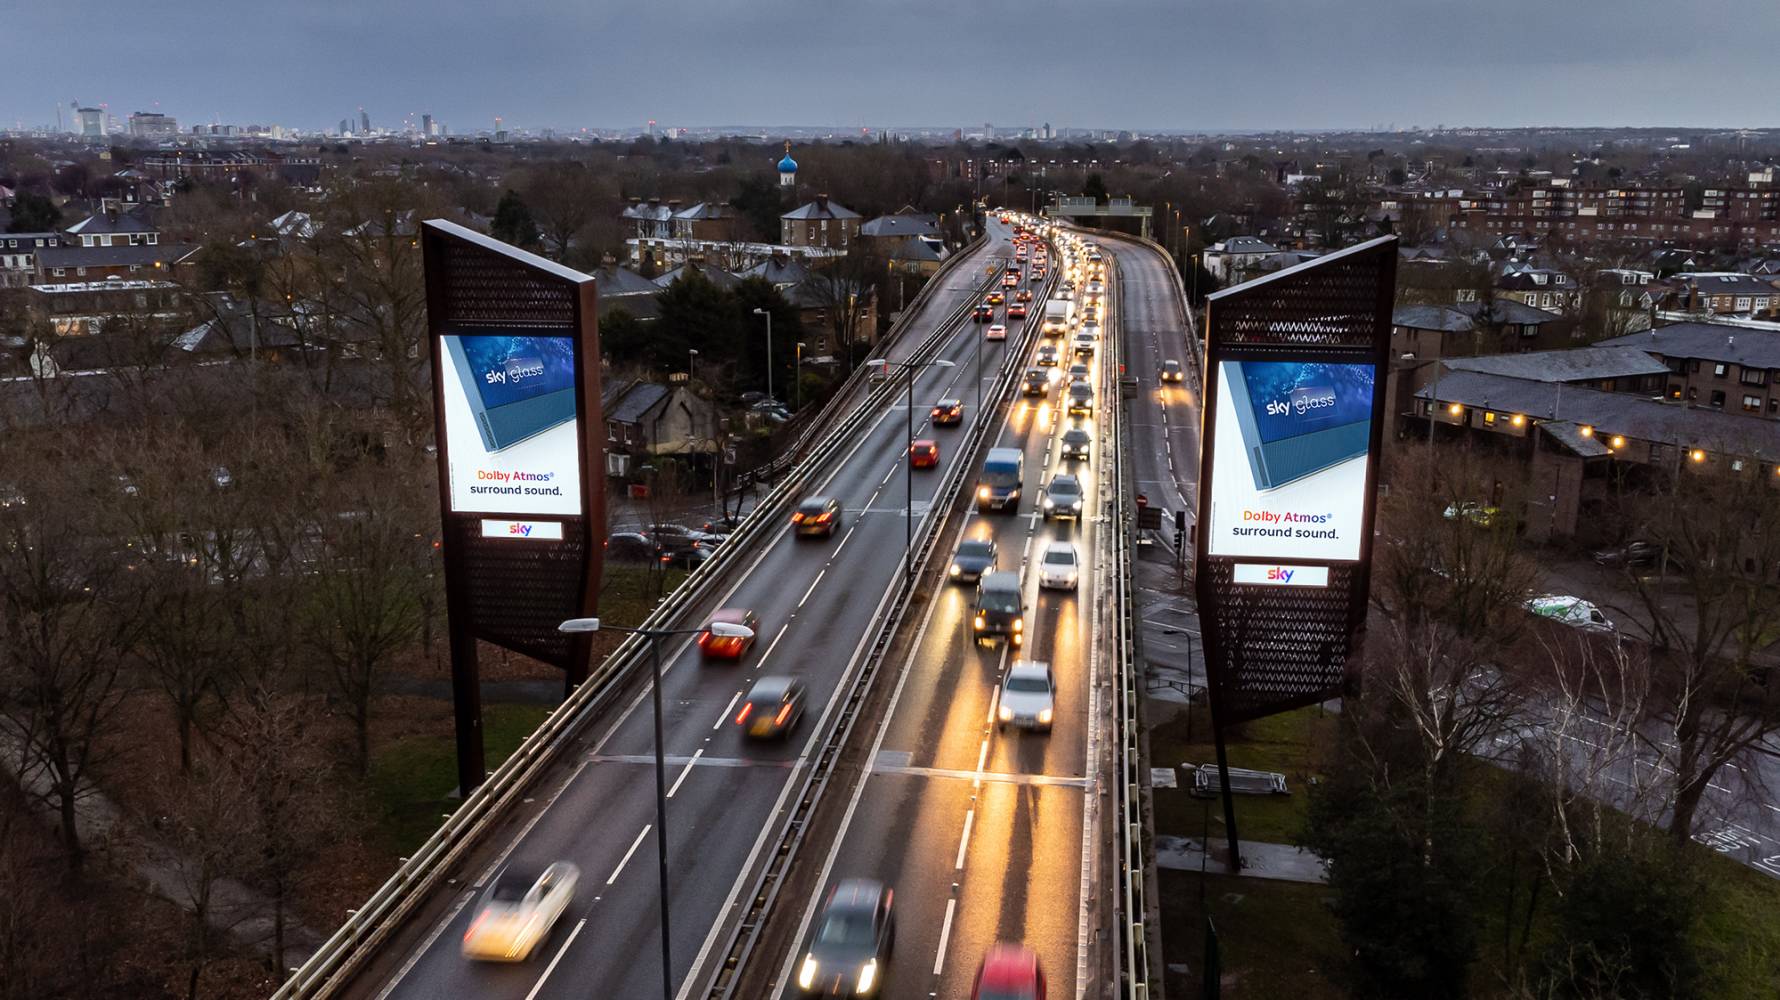 Sky advert on large format digital billboard